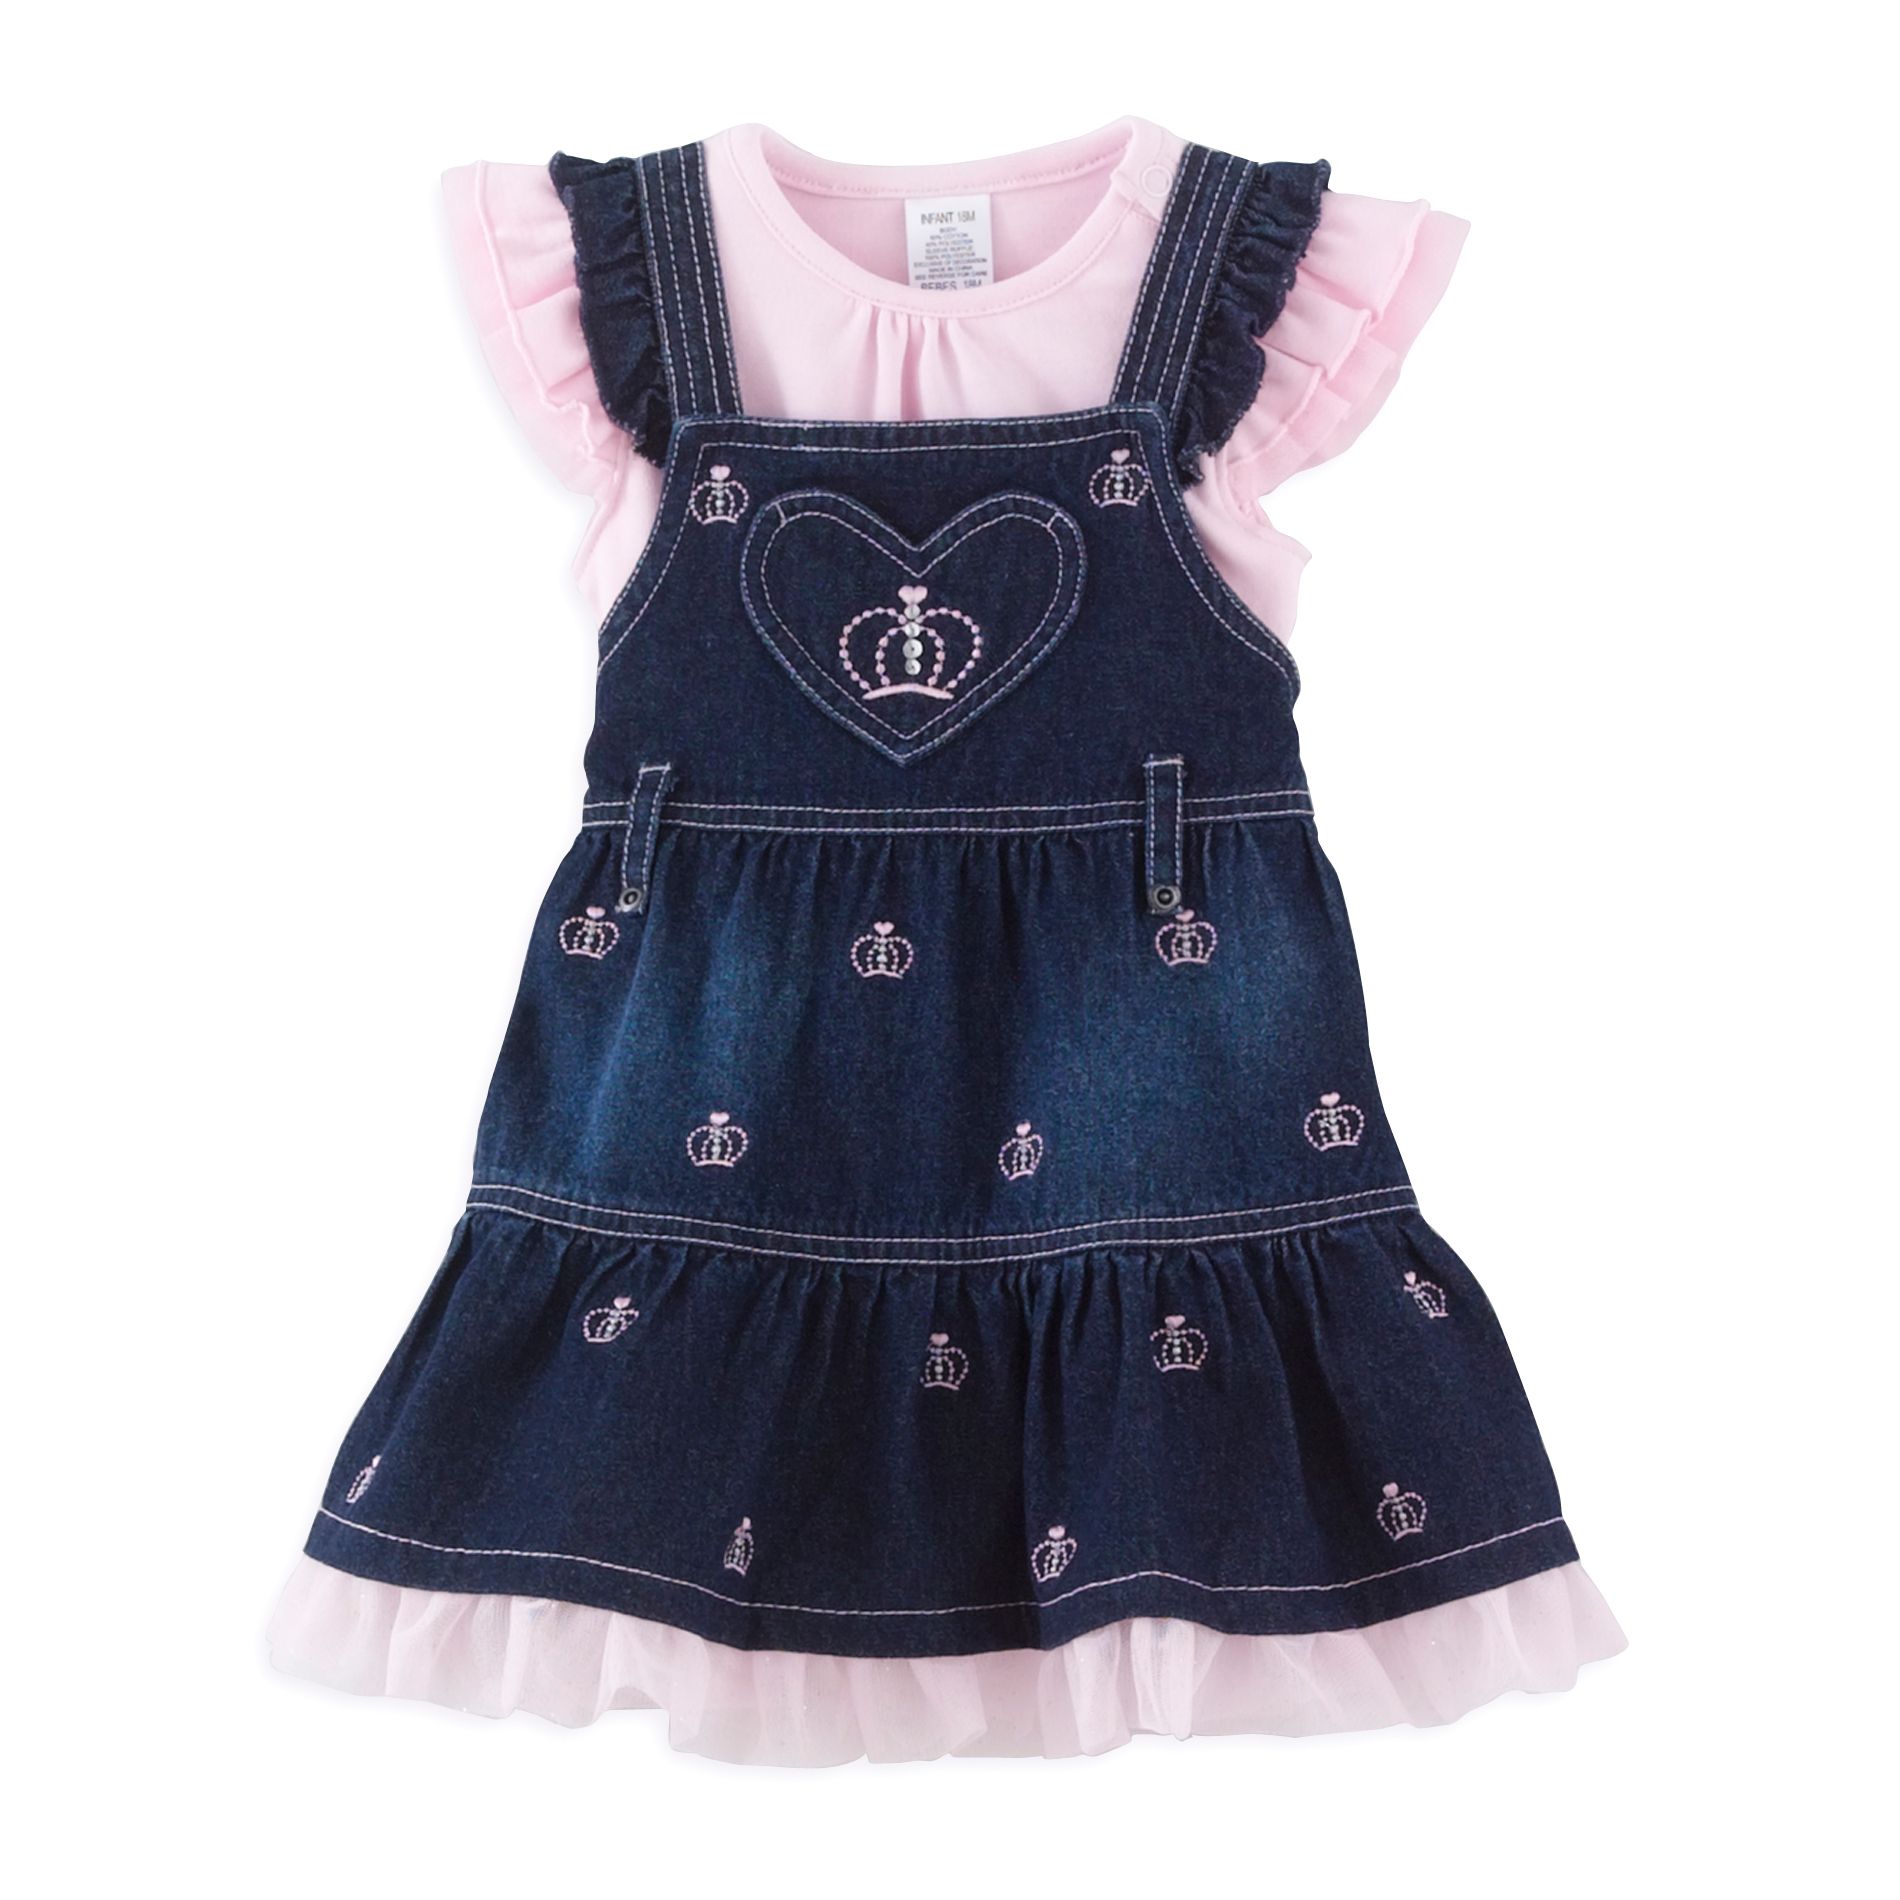 Youngland Newborn Short Sleeve Denim Jumper/Bodysuit Set, Crown Embroidery